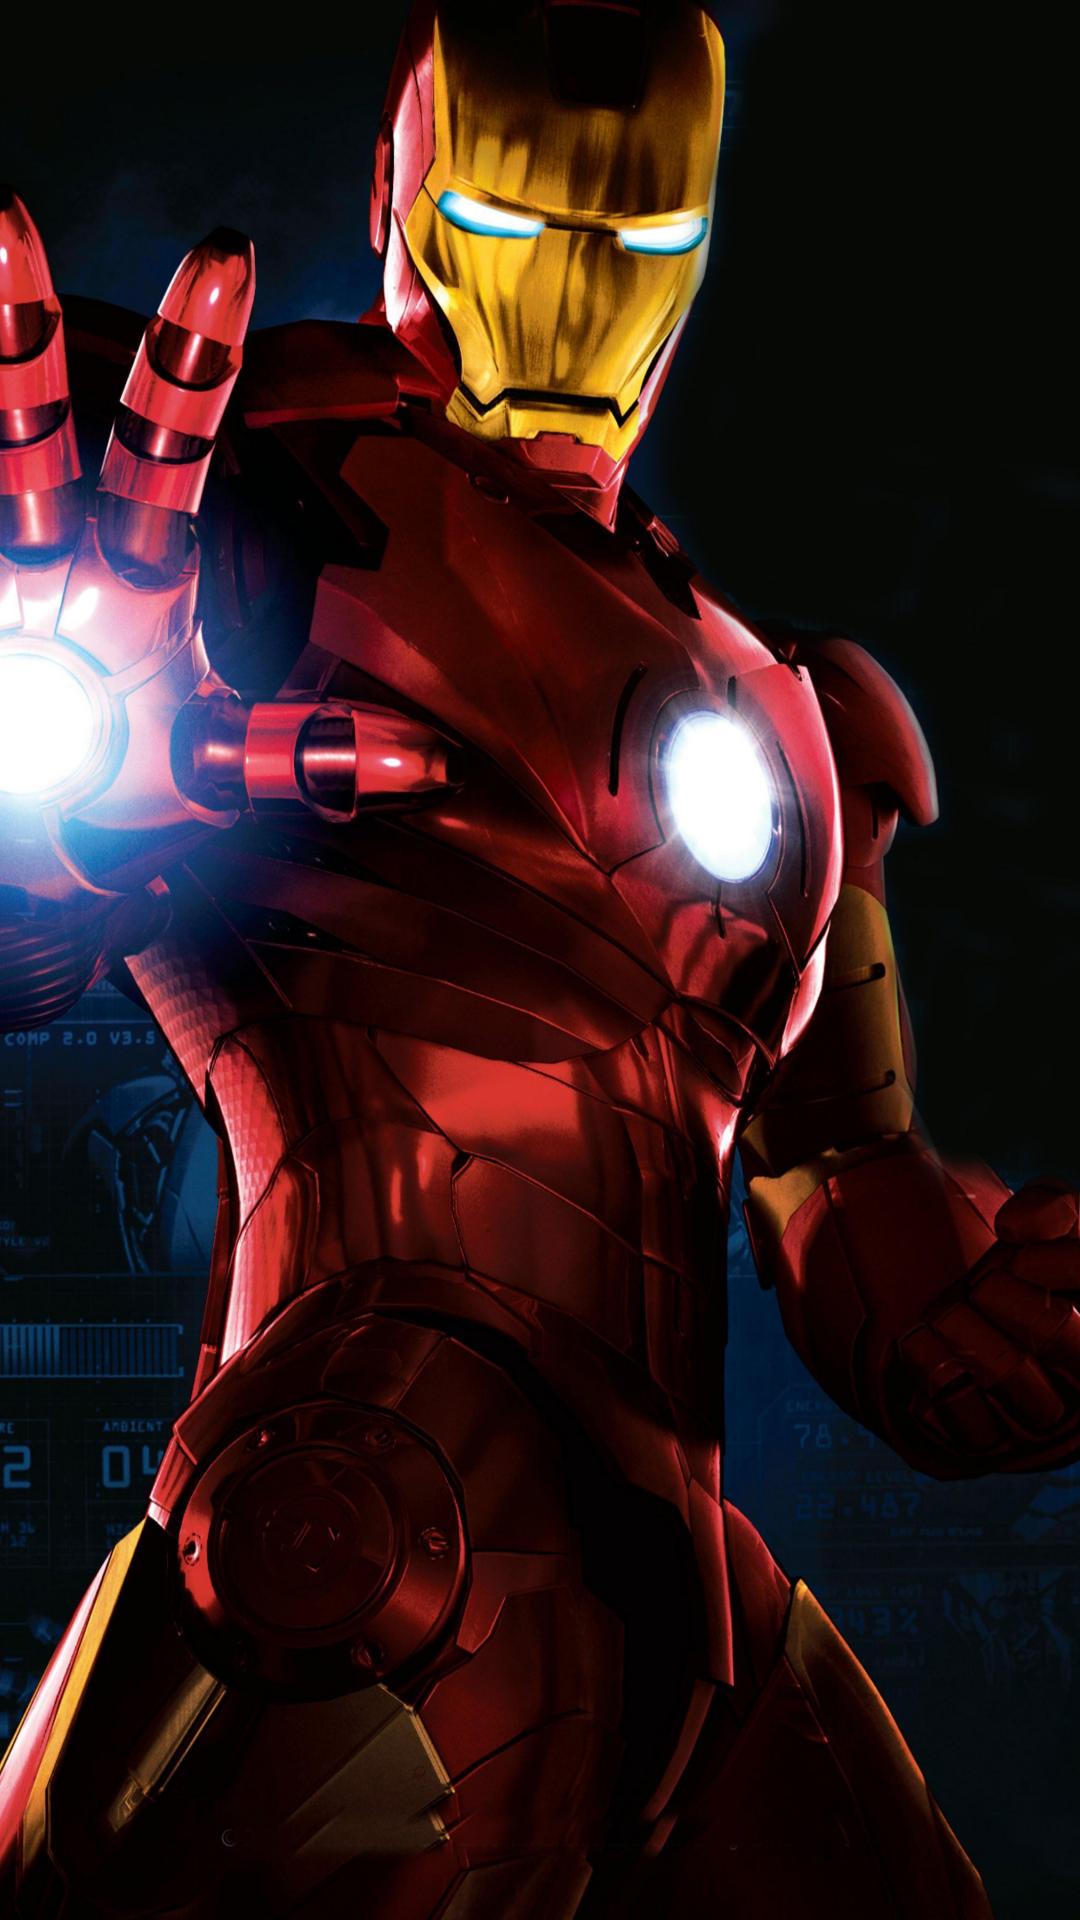  Arc reactor Iron Man Tony Stark armor artwork